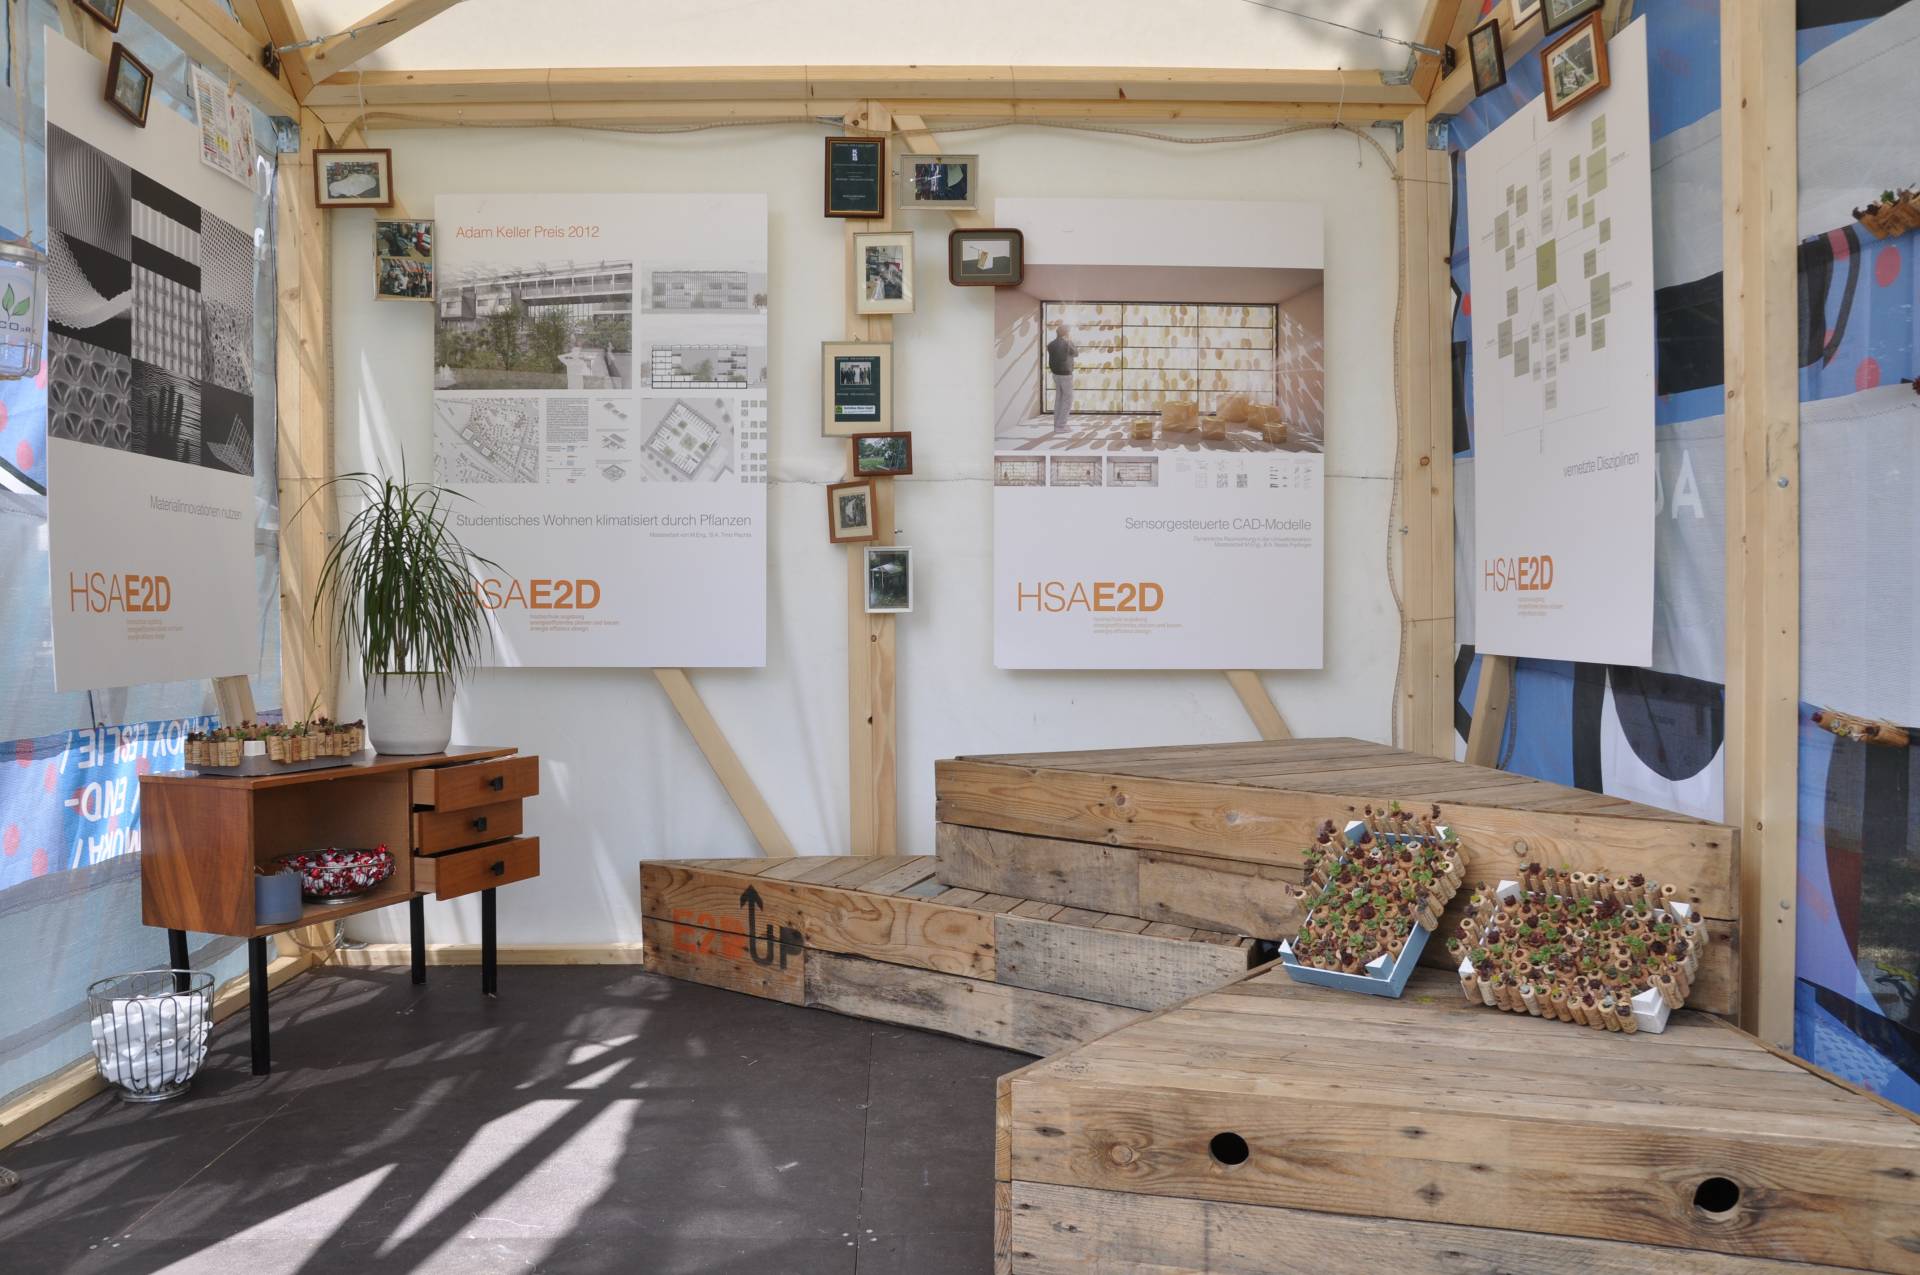 Pavillon des E2D-UP! Projekts mit dreieckigen Bühnen-/ Sitzmodulen aus alten Holzpaletten